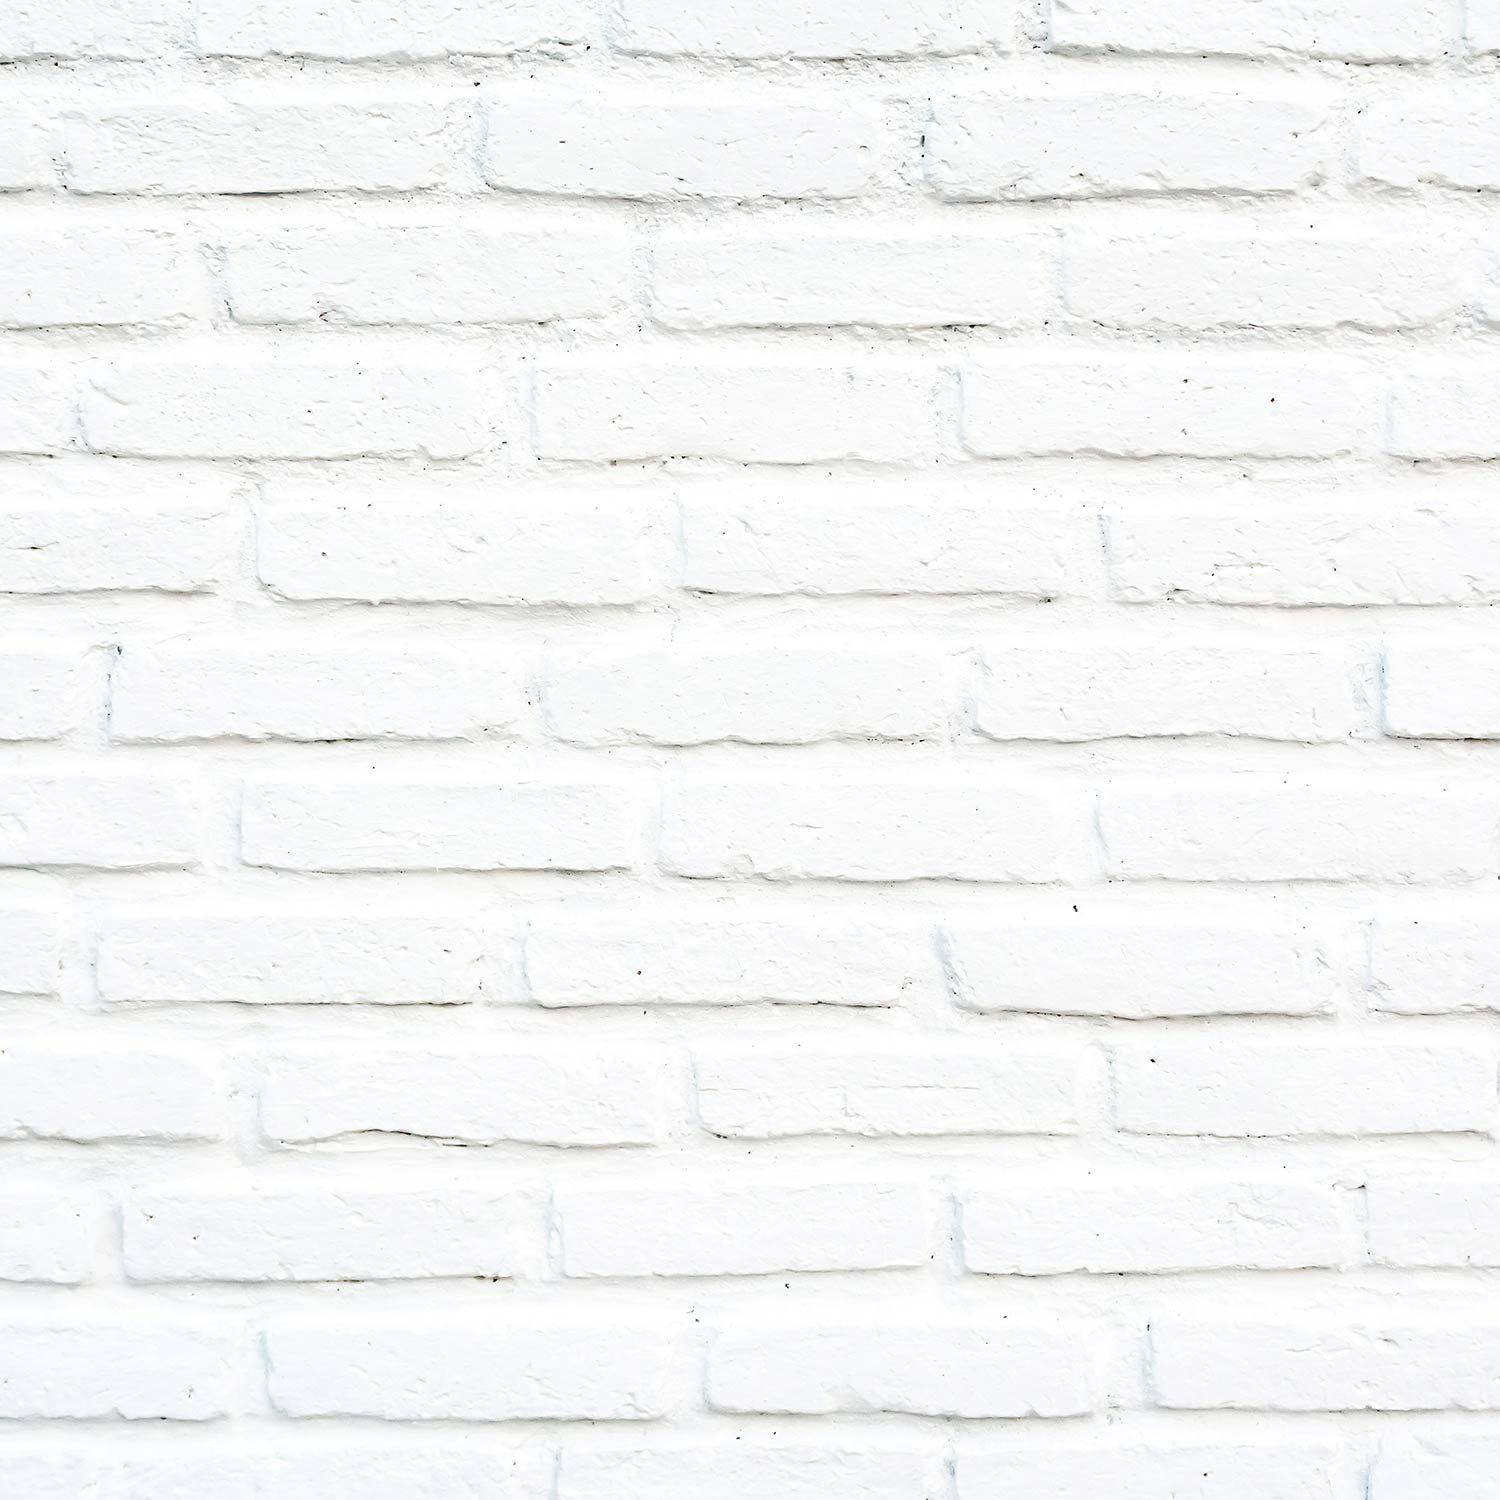 Bright White Brick Wall Stretcher Bond Background